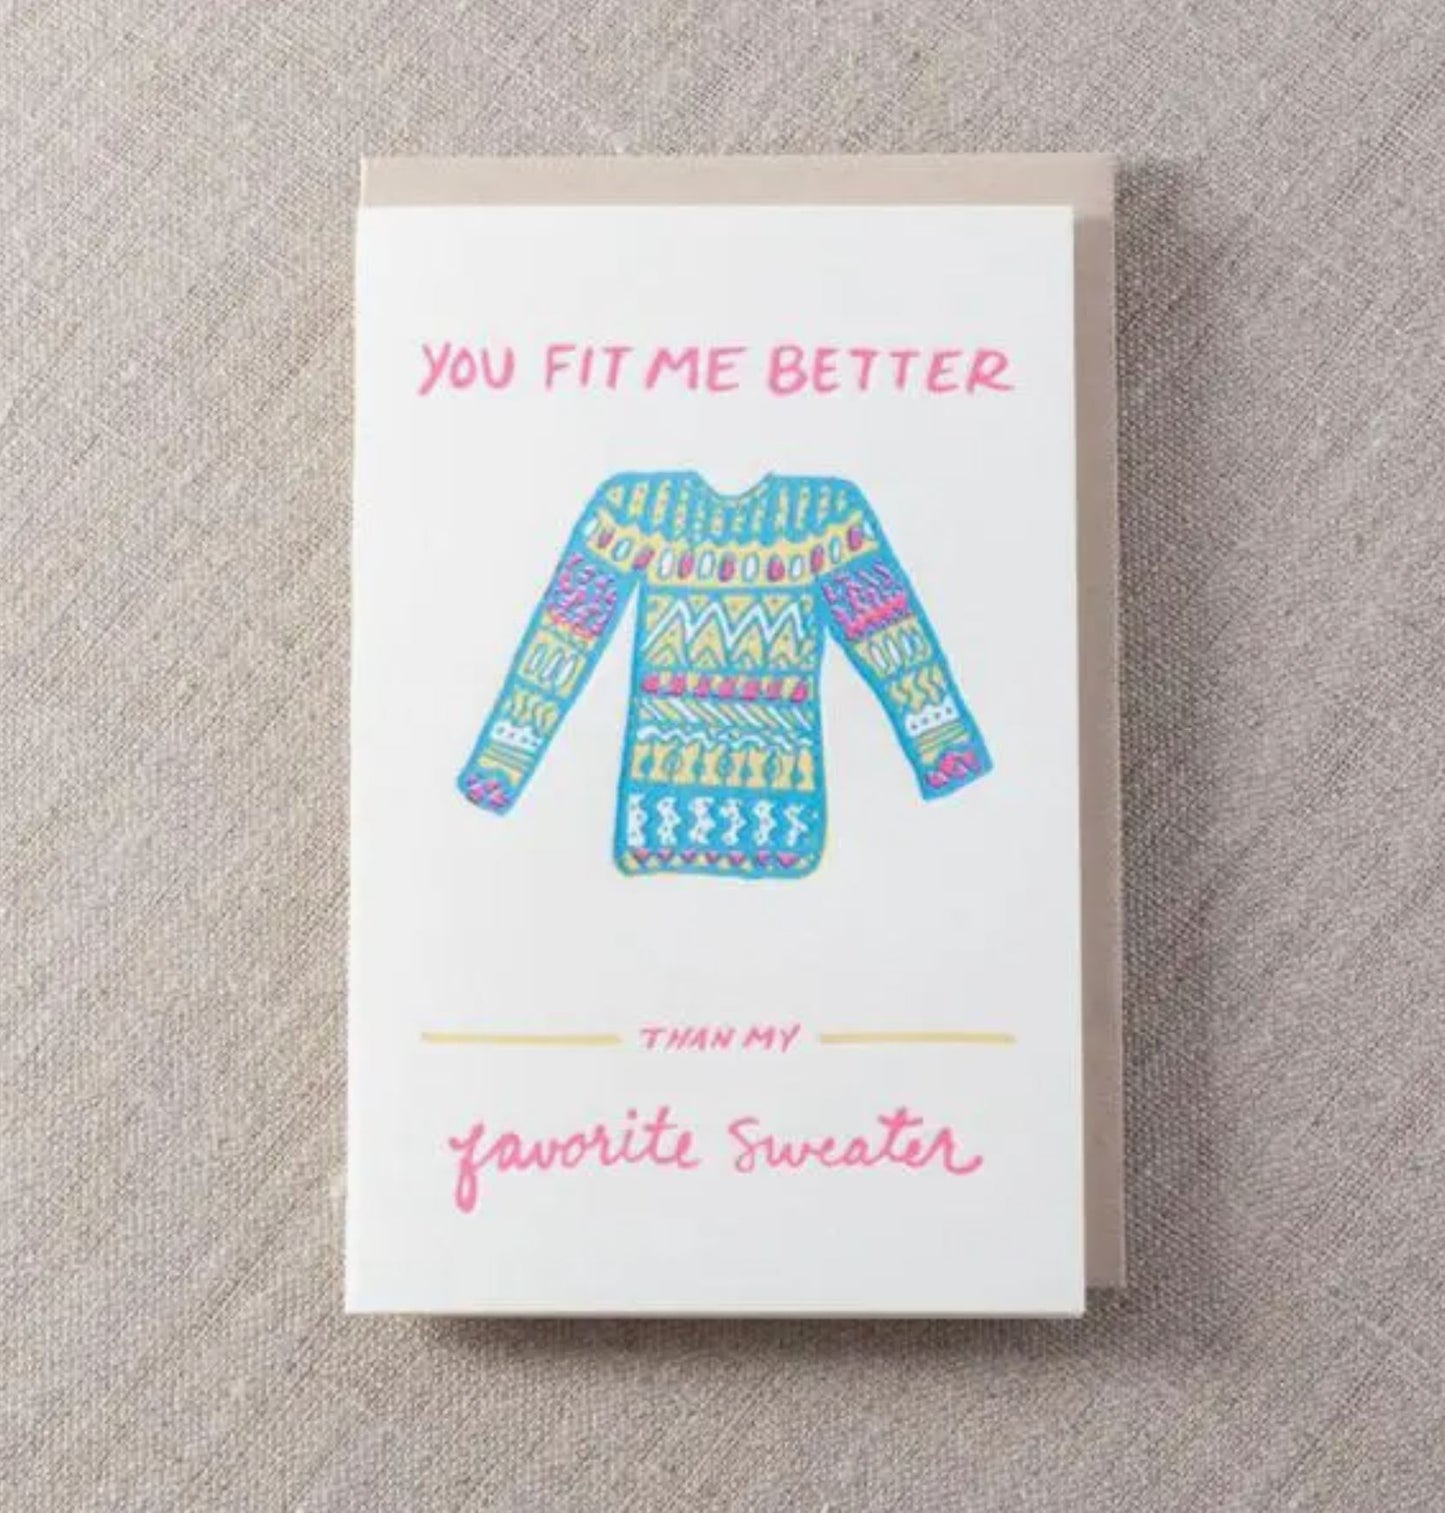 Favorite Sweater Greeting Card